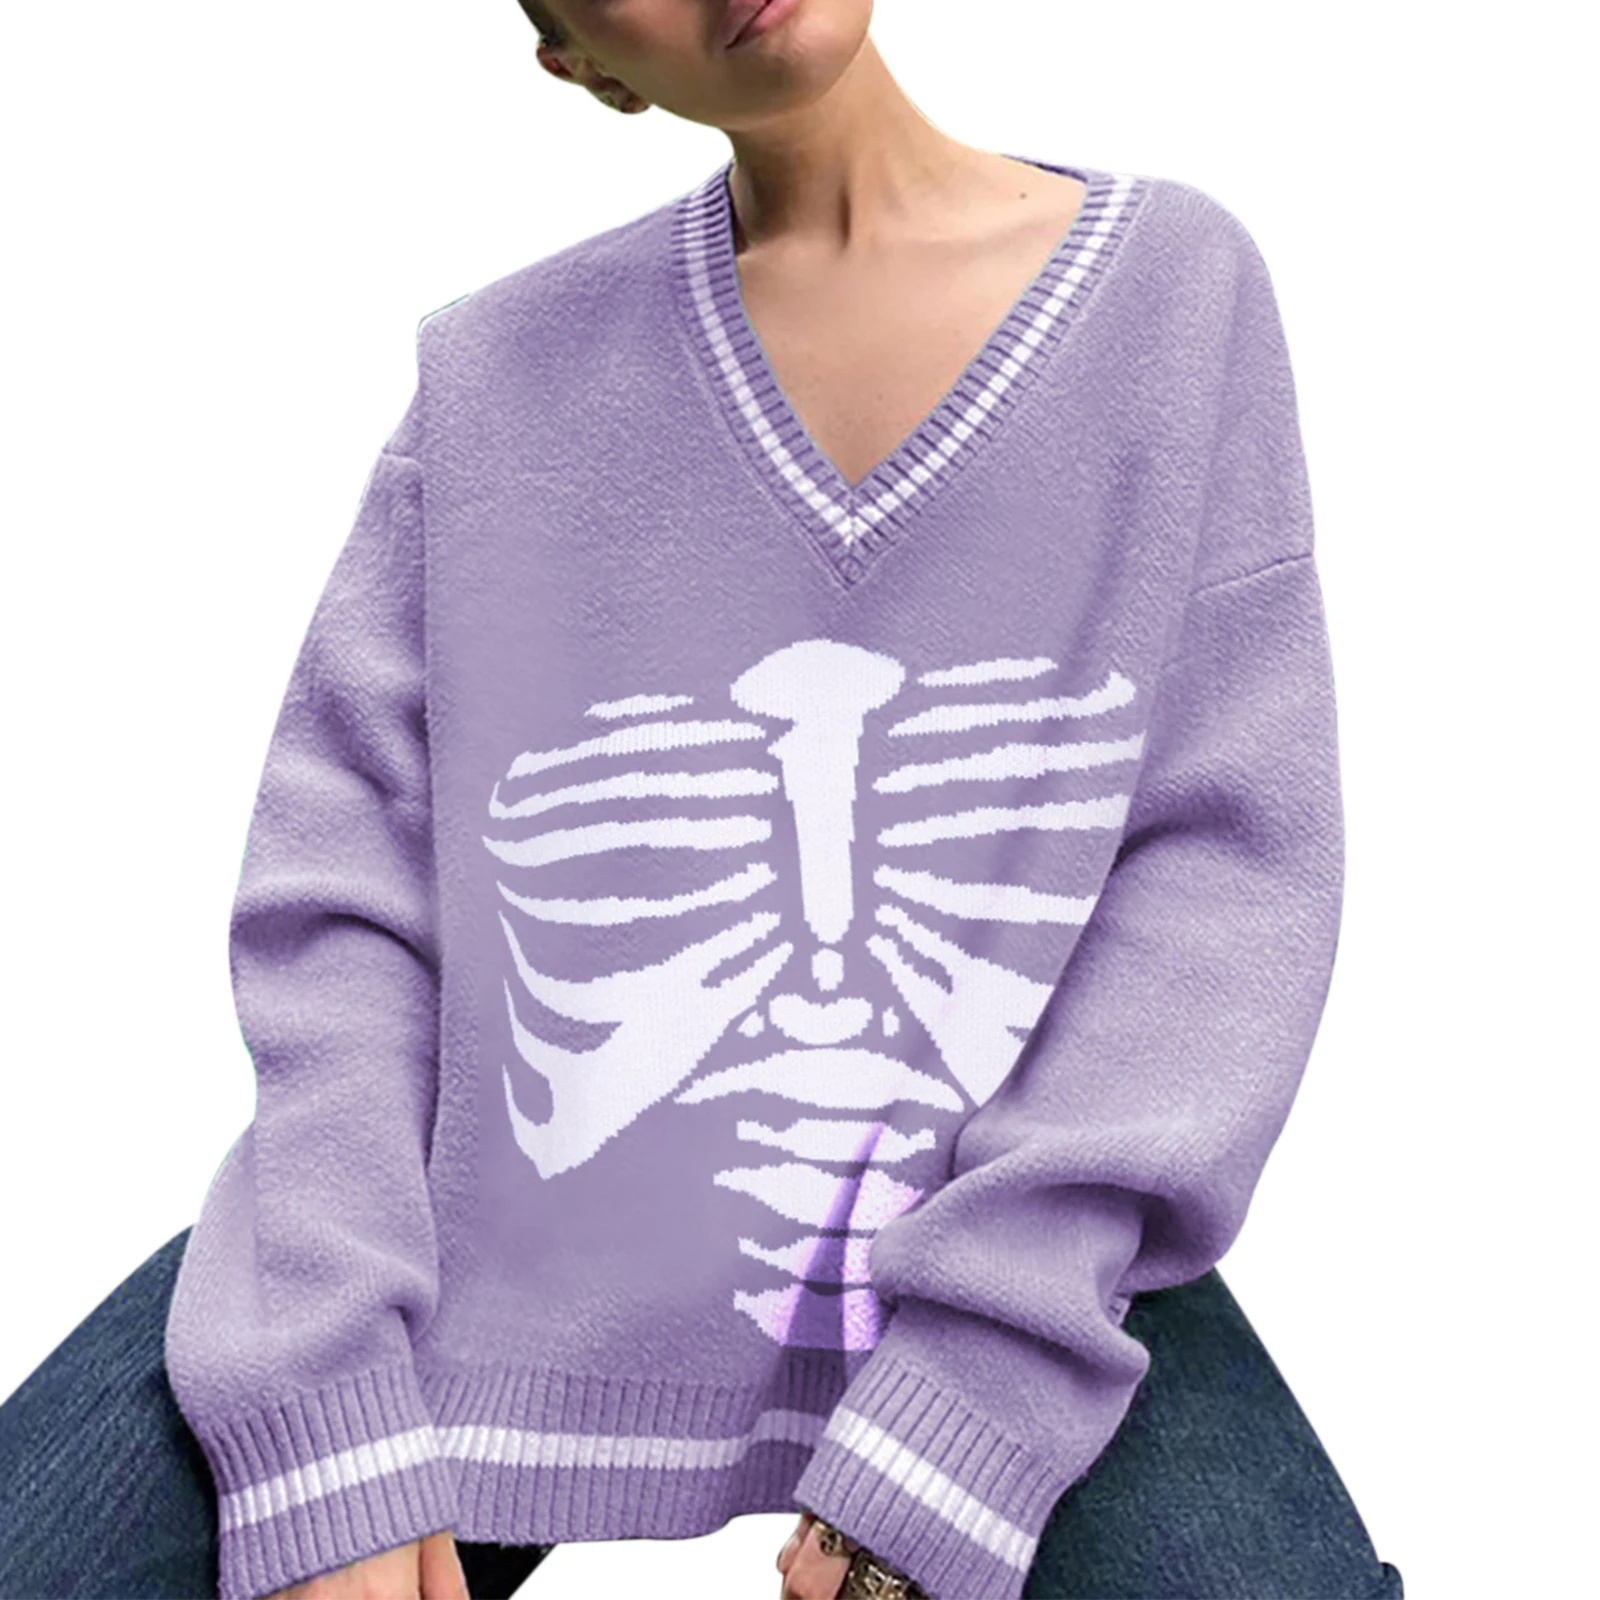 Winter Sweater Women 2021 Fashion Skeleton Print Pullover Women Long Sleeve Casual Tops Loose Preppy Style Warm Sweater pink cardigan